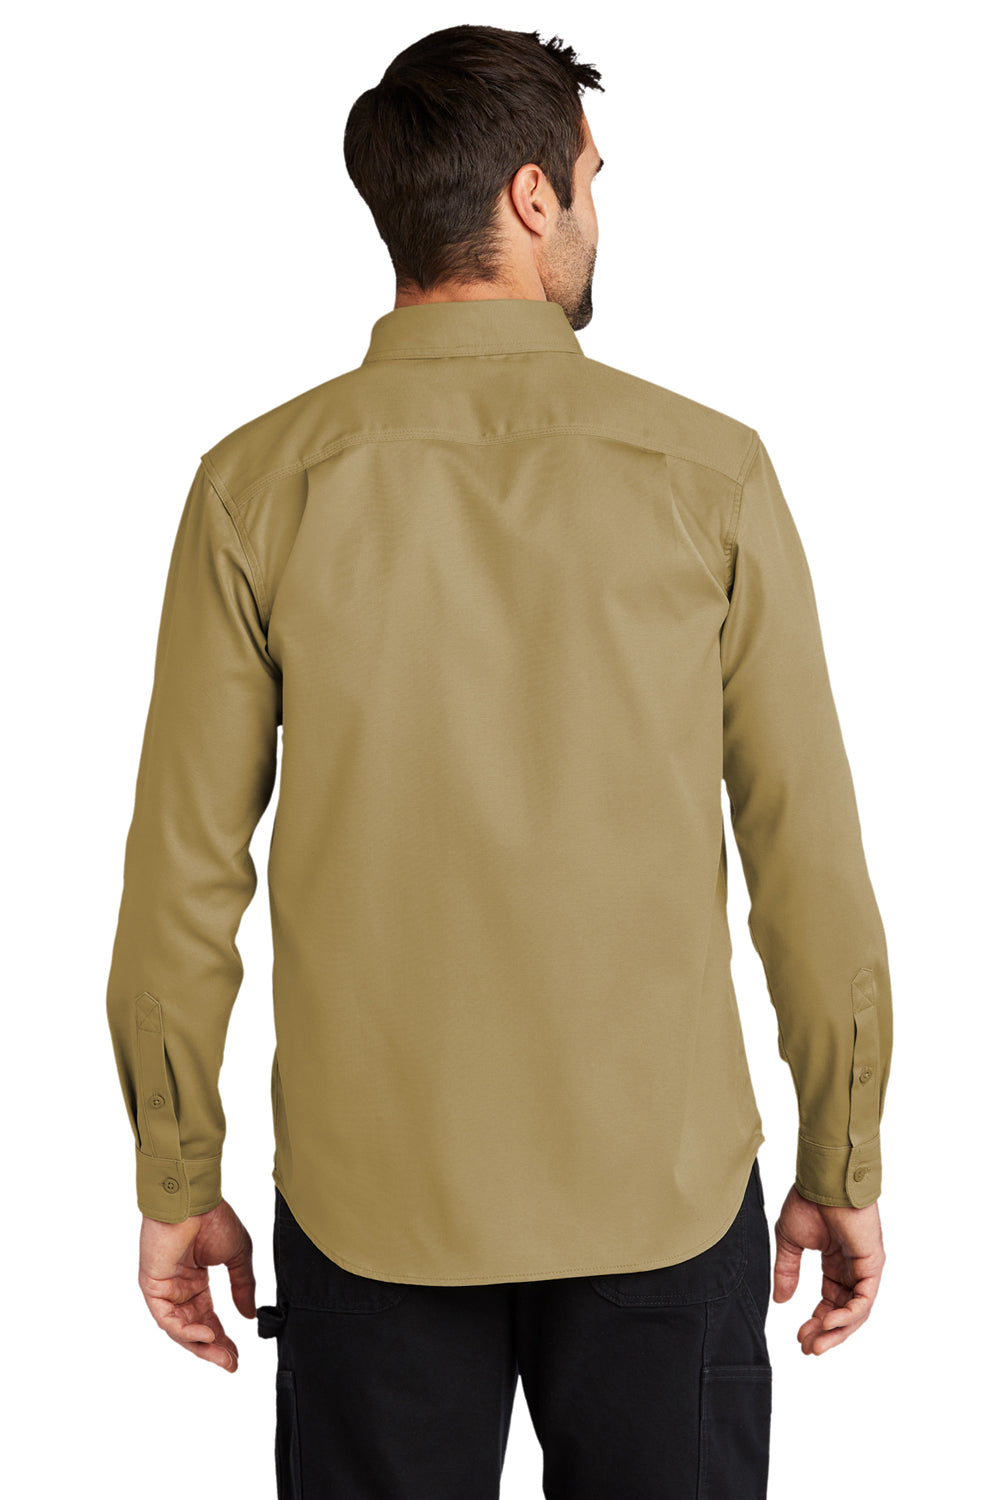 Carhartt CT102538 Mens Rugged Professional Series Wrinkle Resistant Long Sleeve Button Down Shirt w/ Pocket Dark Khaki Brown Model Back